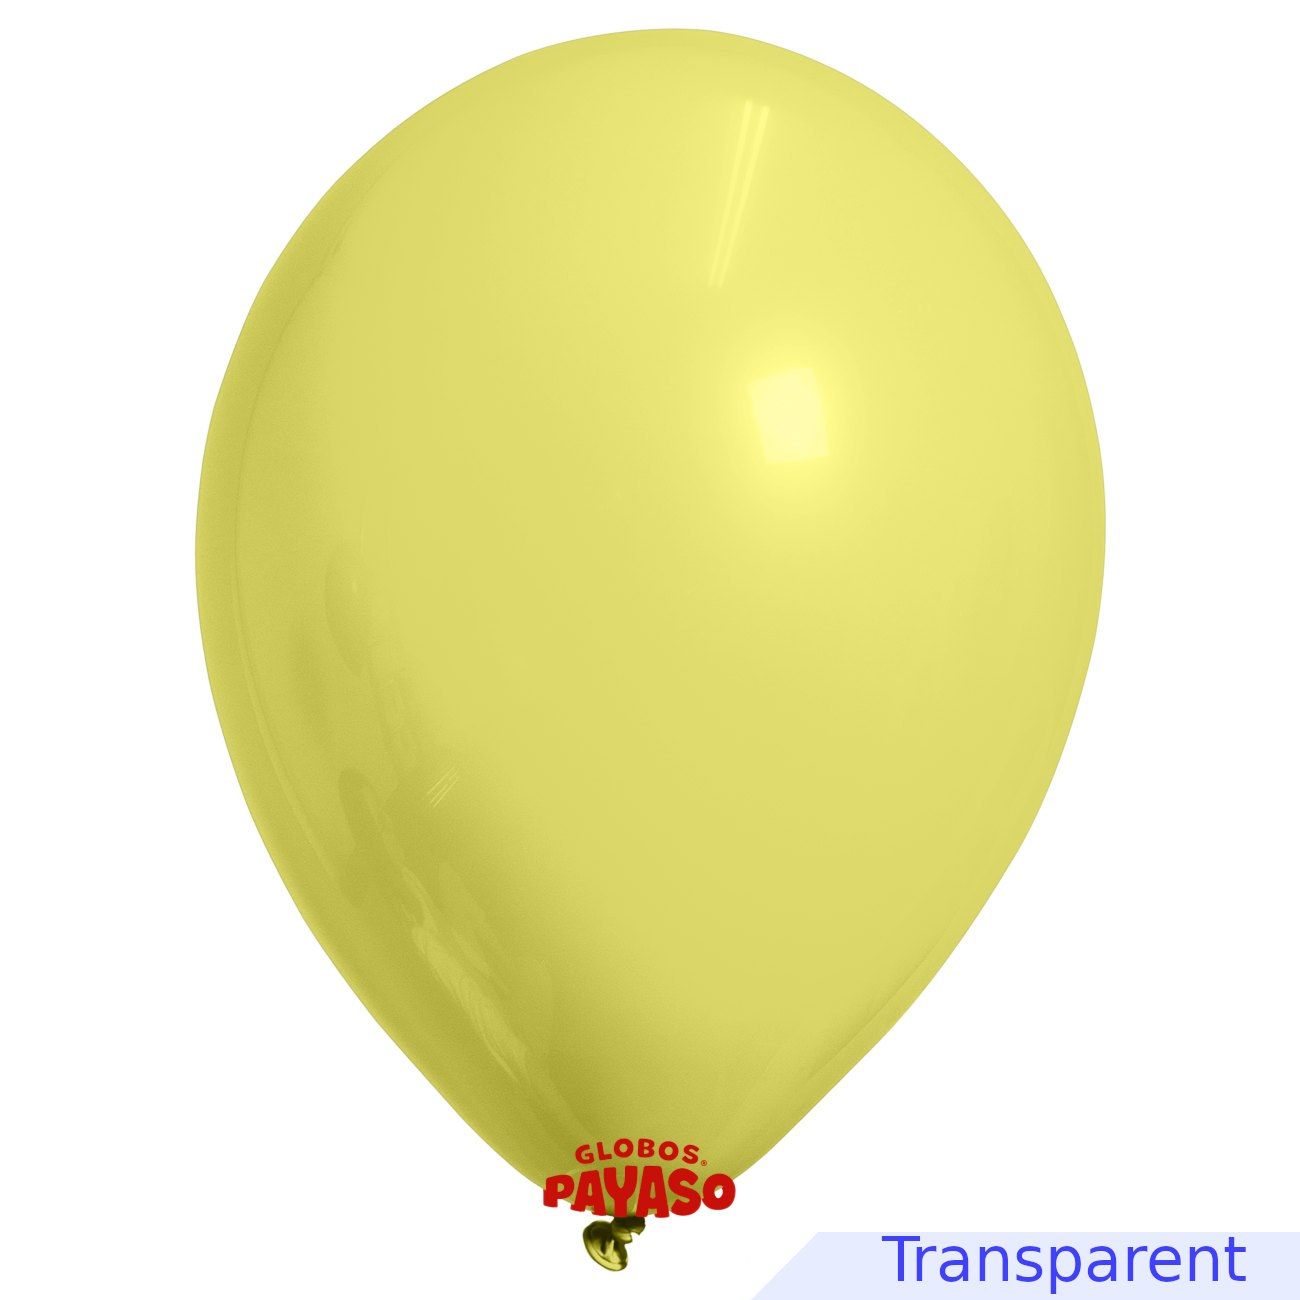 Globos Payaso / Unique 16" Yellow Translucid Decorator Balloon